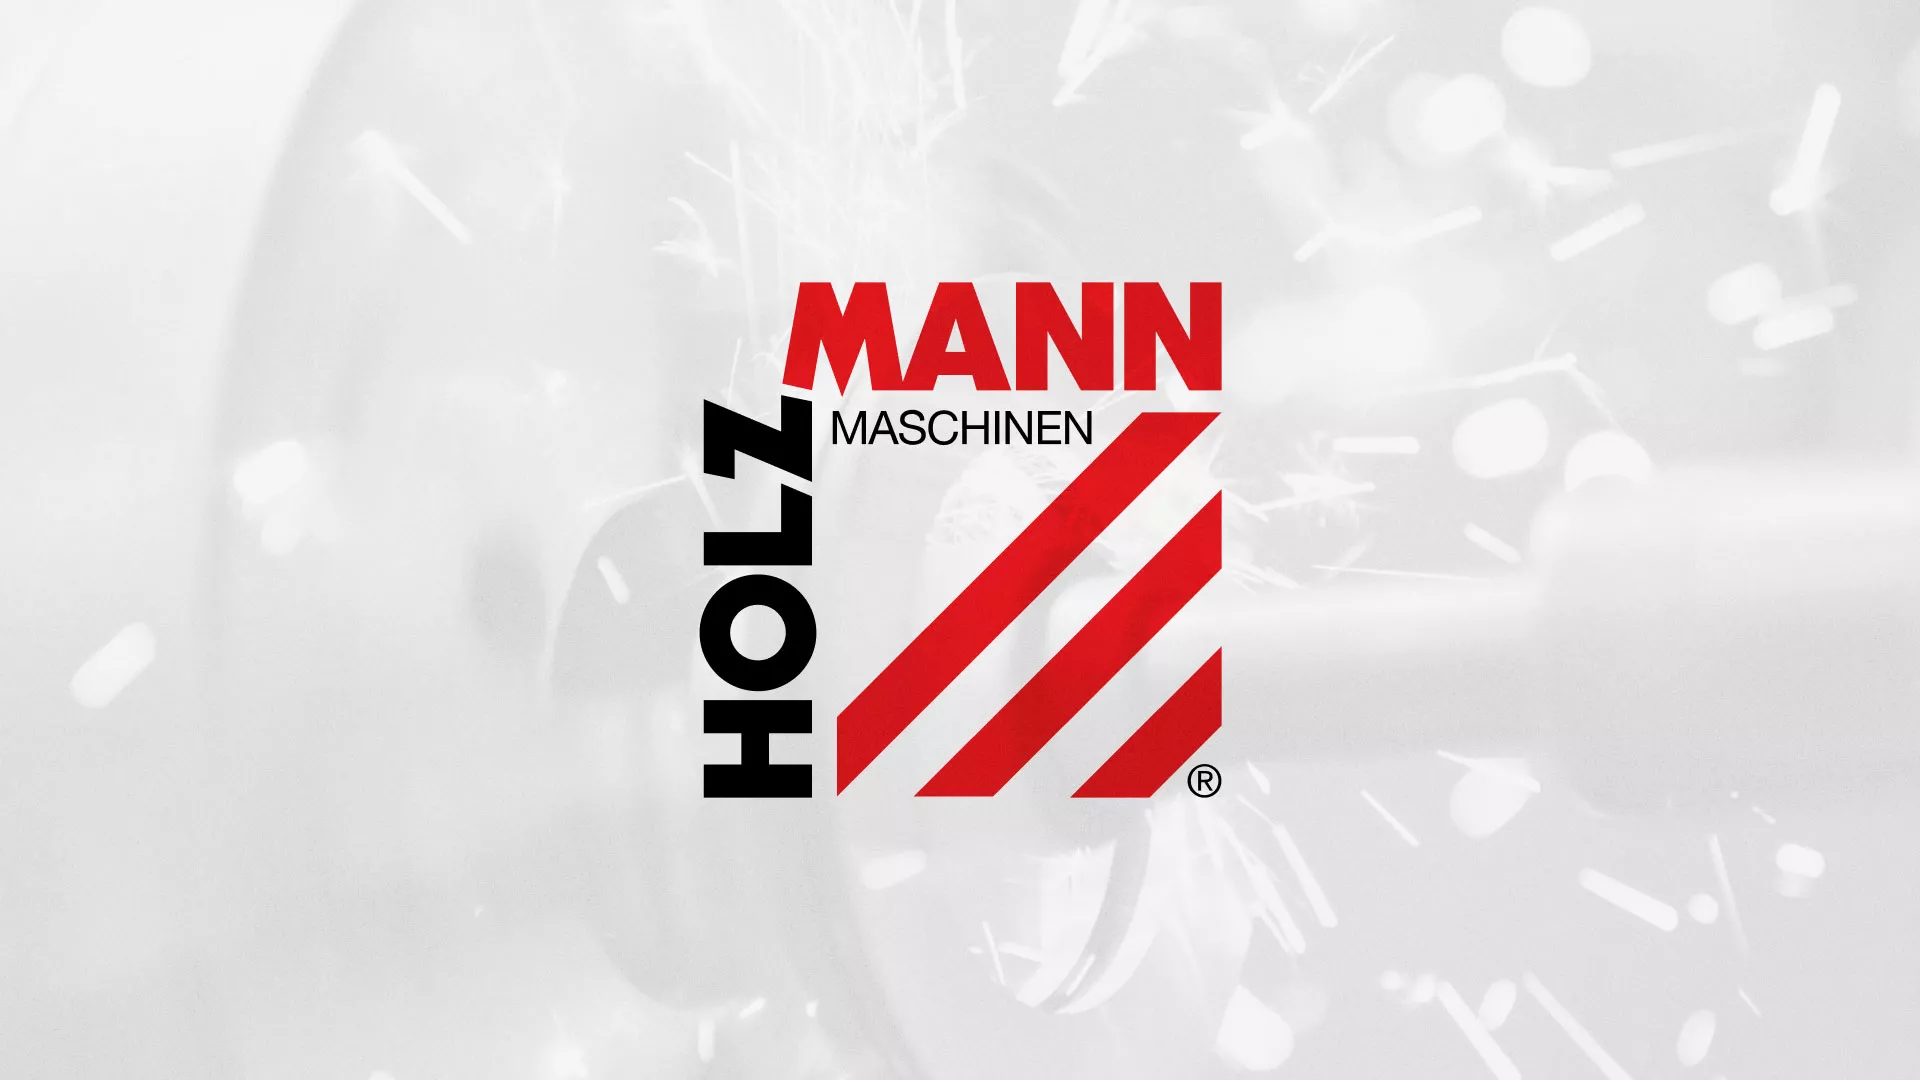 Создание сайта компании «HOLZMANN Maschinen GmbH» в Лосино-Петровске